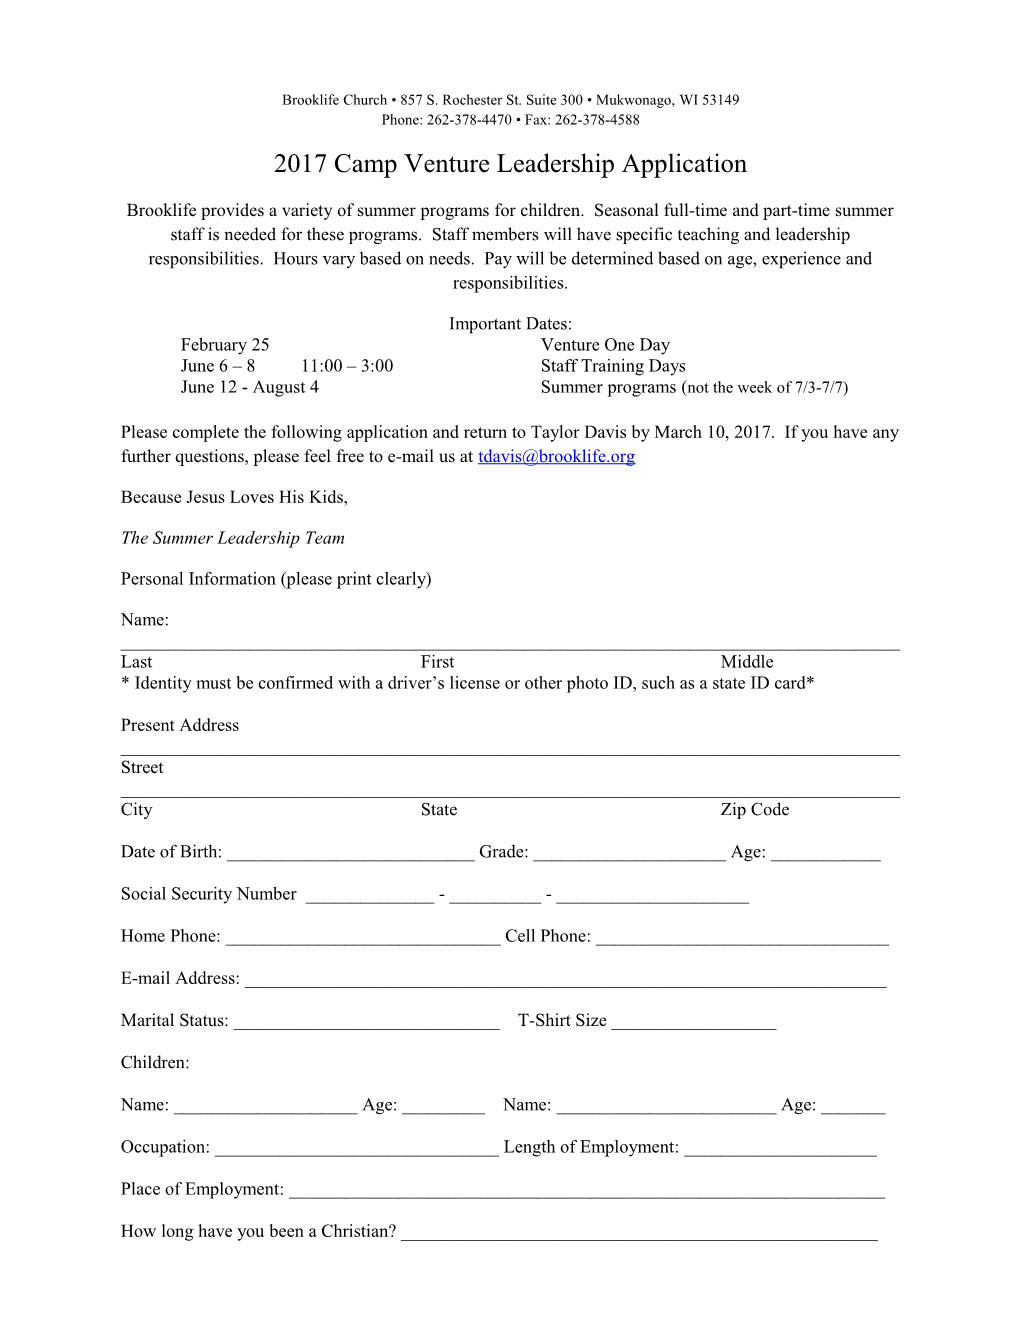 2017 Camp Venture Leadership Application